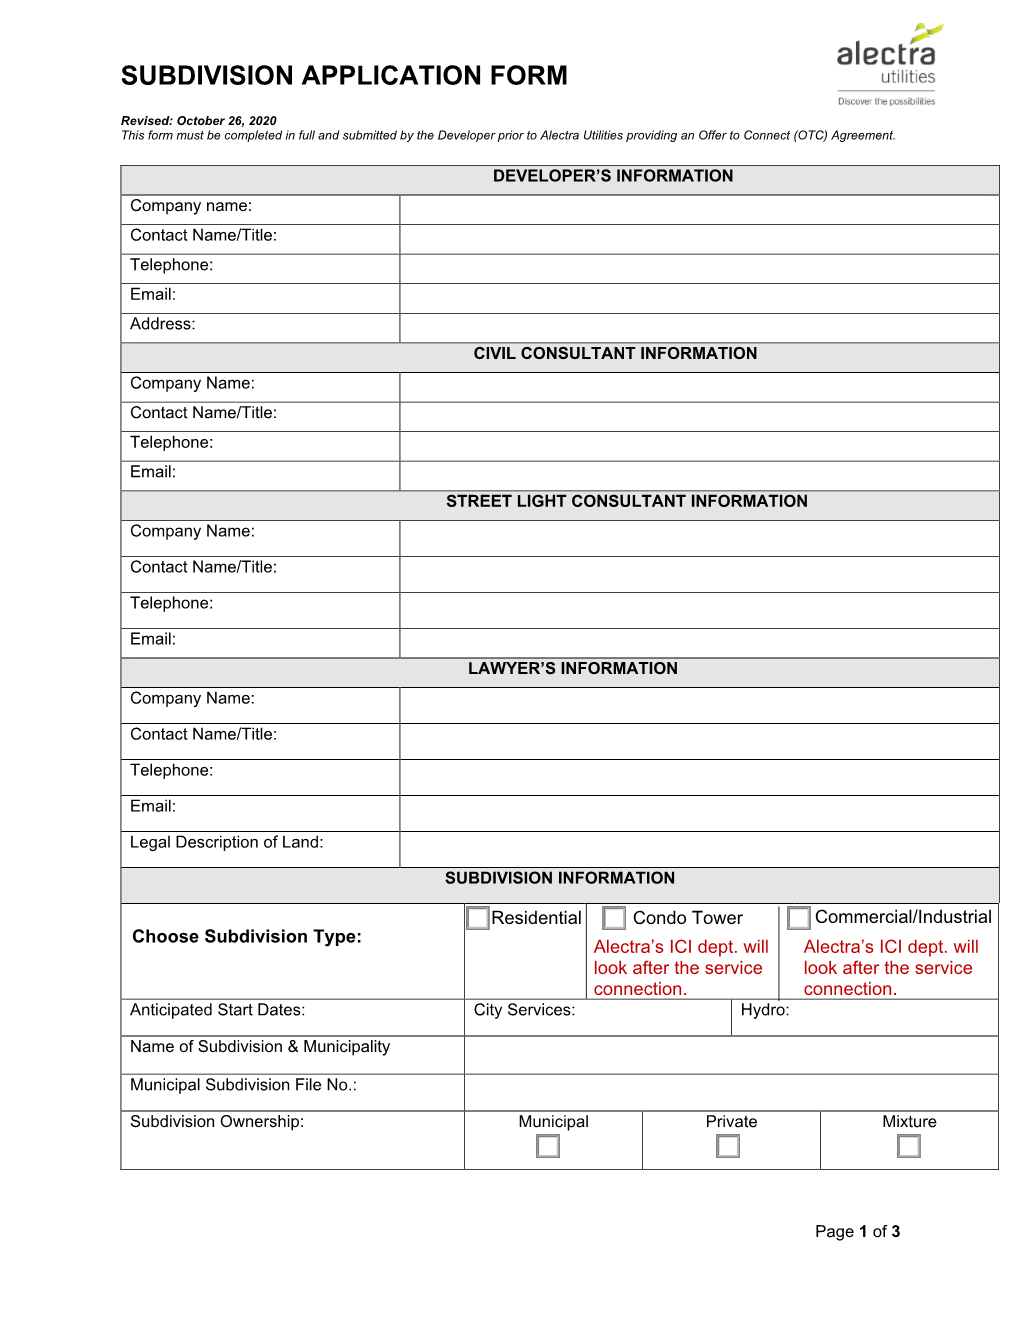 Alectra Utilities Subdivision Application Form